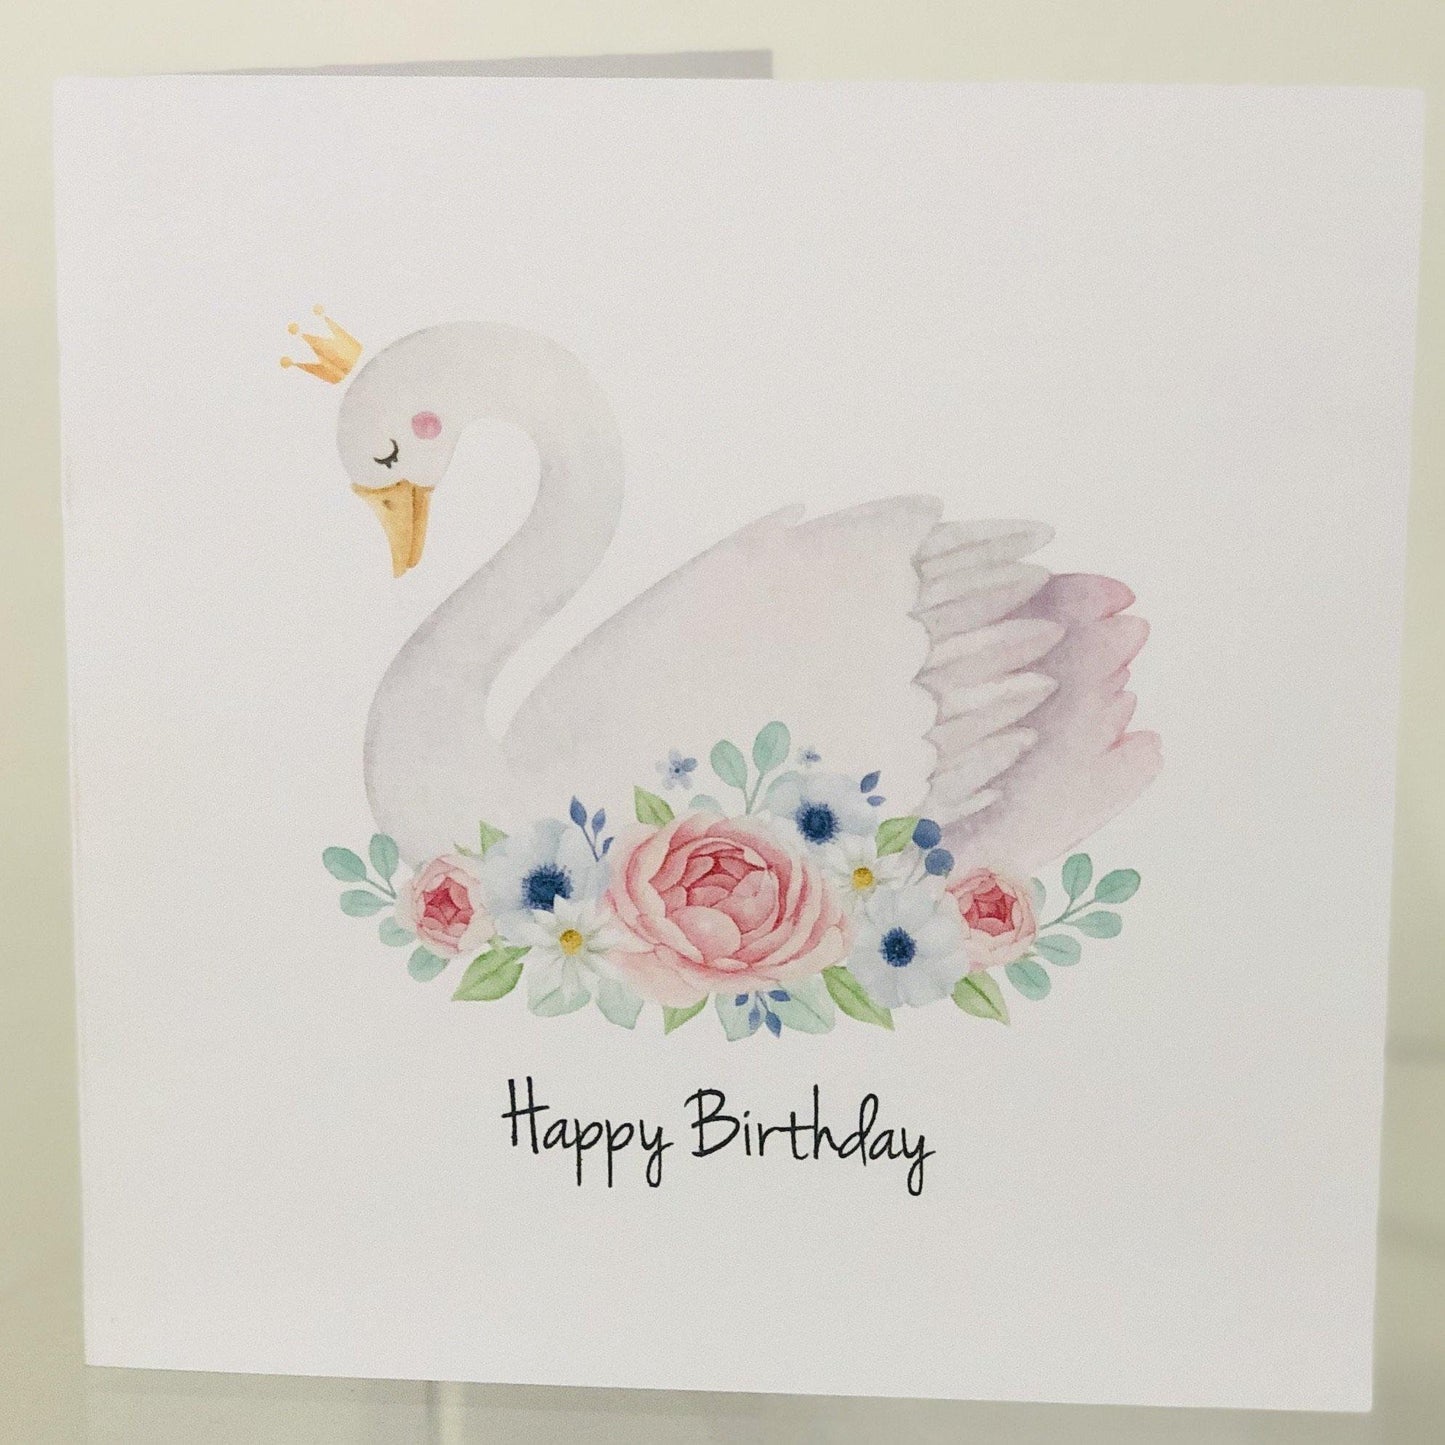 Happy Birthday Swan Card | Oscar & Me | Baby & Children’s Clothing & Accessories